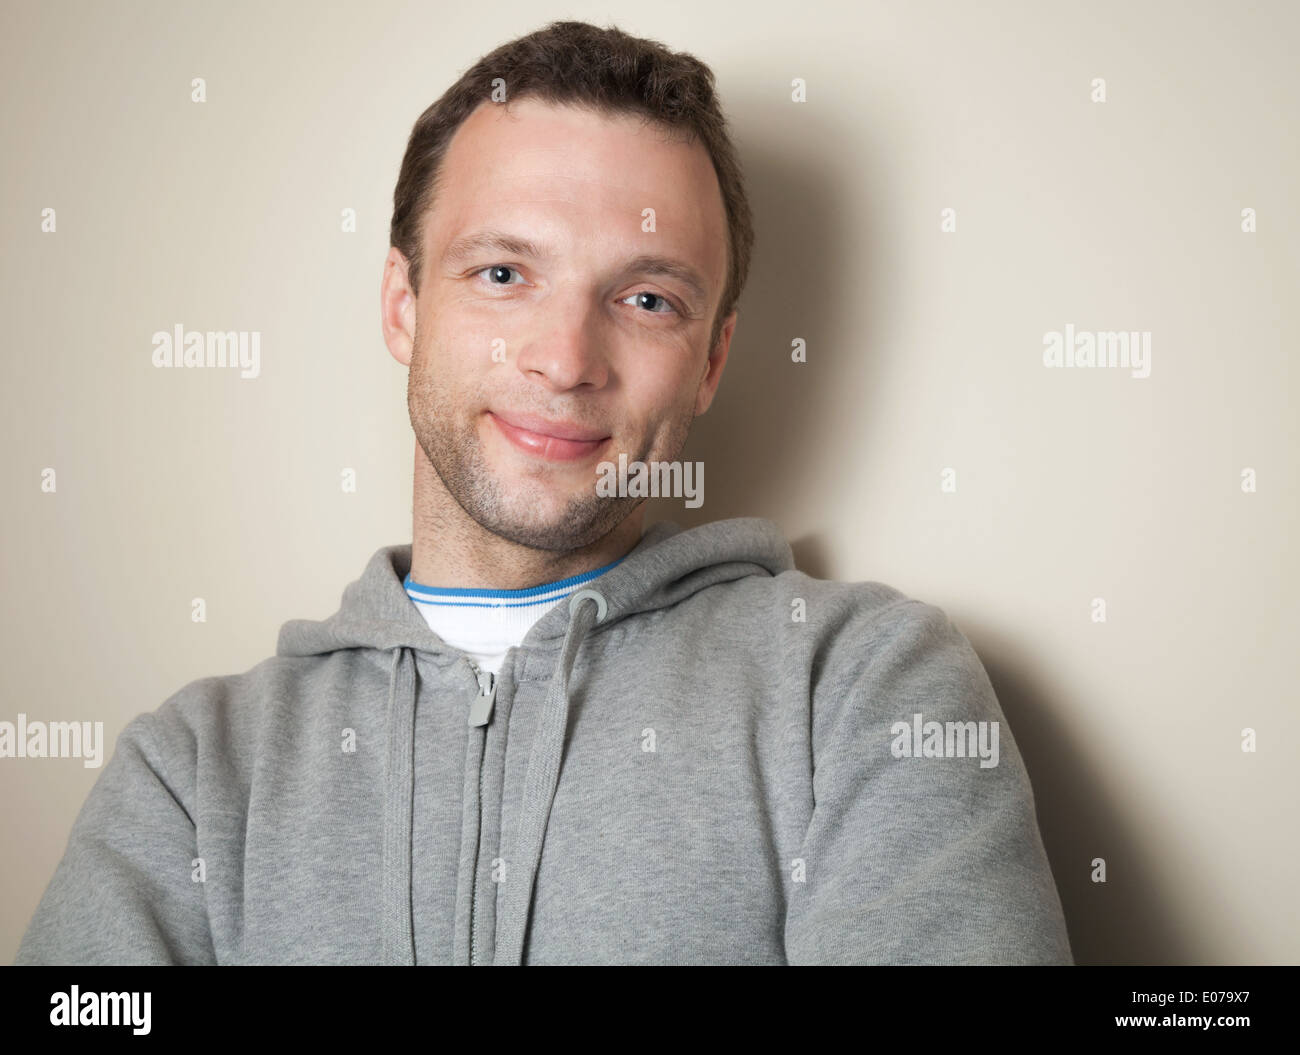 Joven Hombre caucásico positivo en gris chaqueta deportiva con capucha Foto de stock